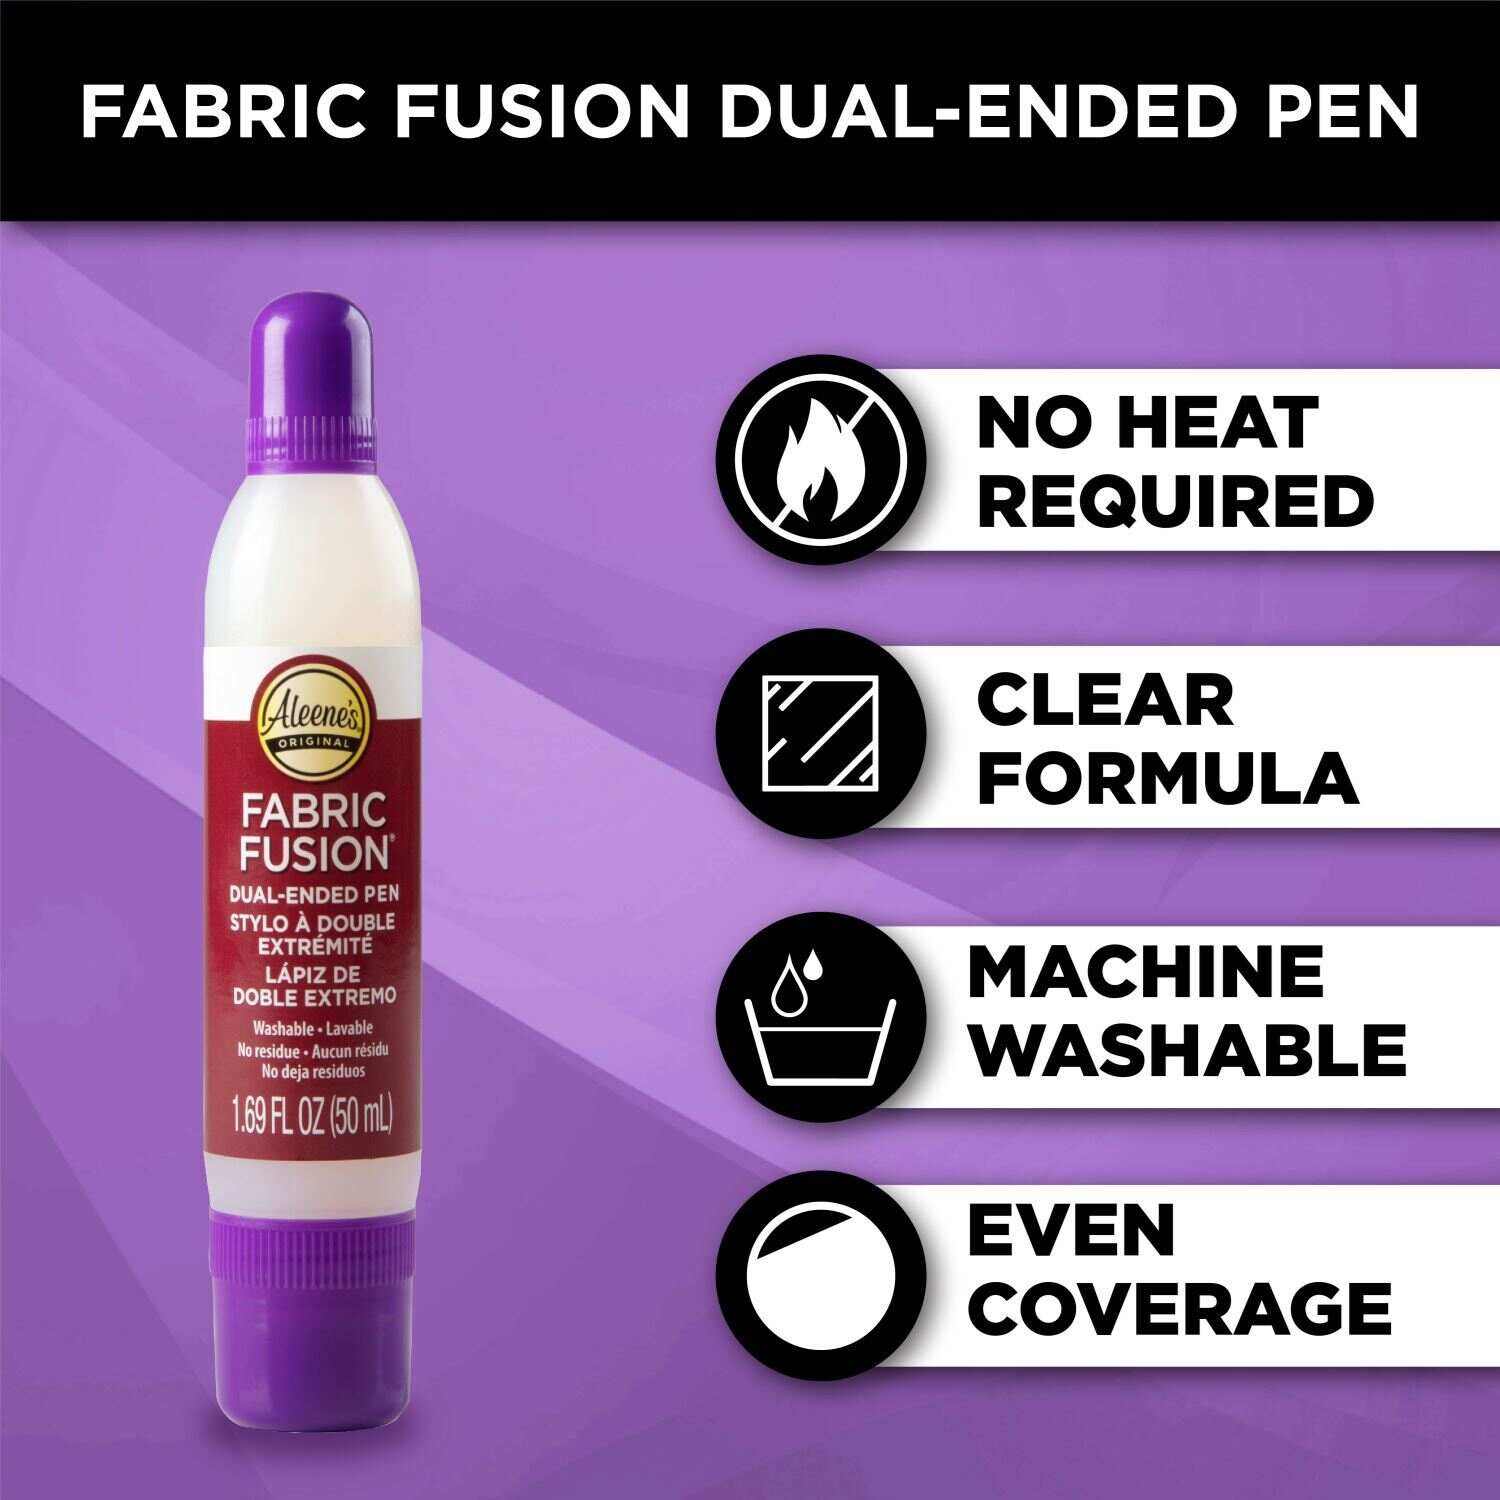 Aleene's® Fabric Fusion®